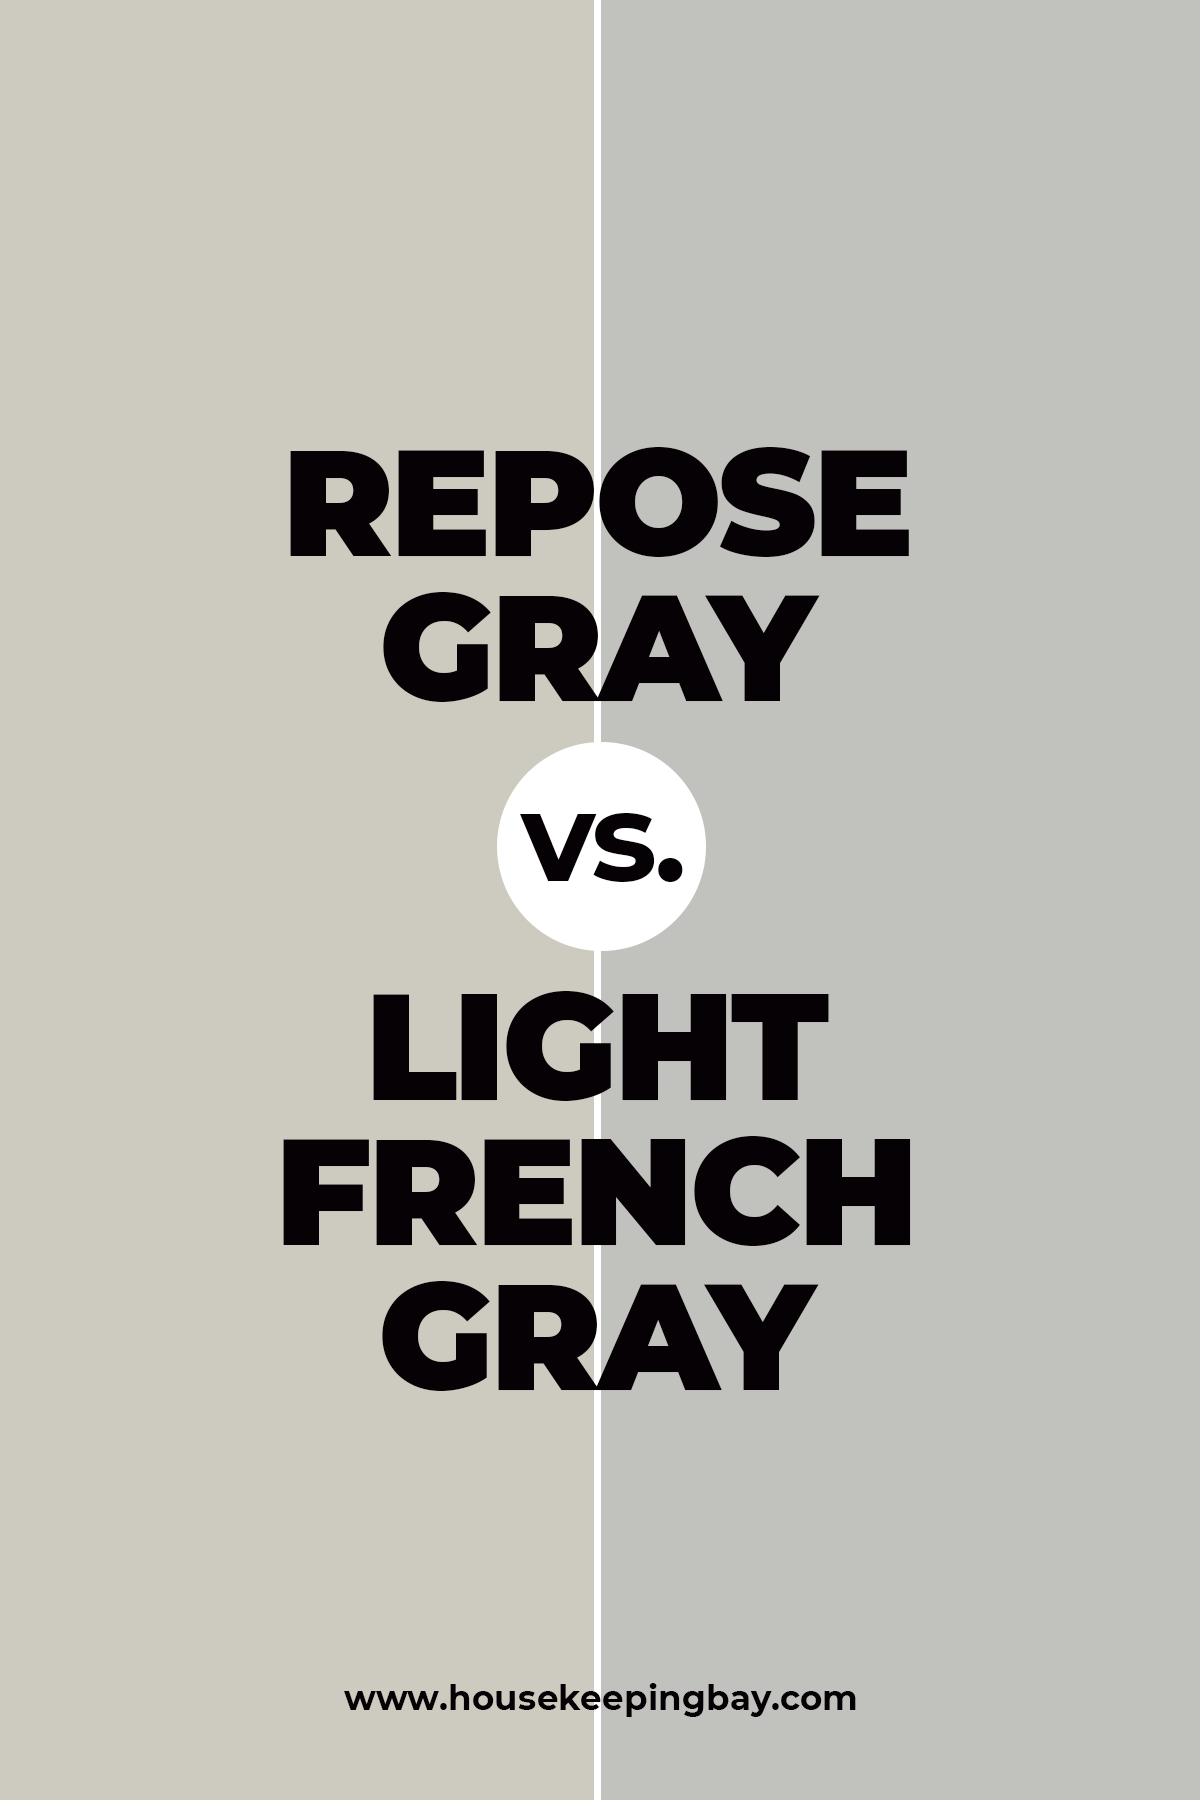 Repose gray vs light french gray